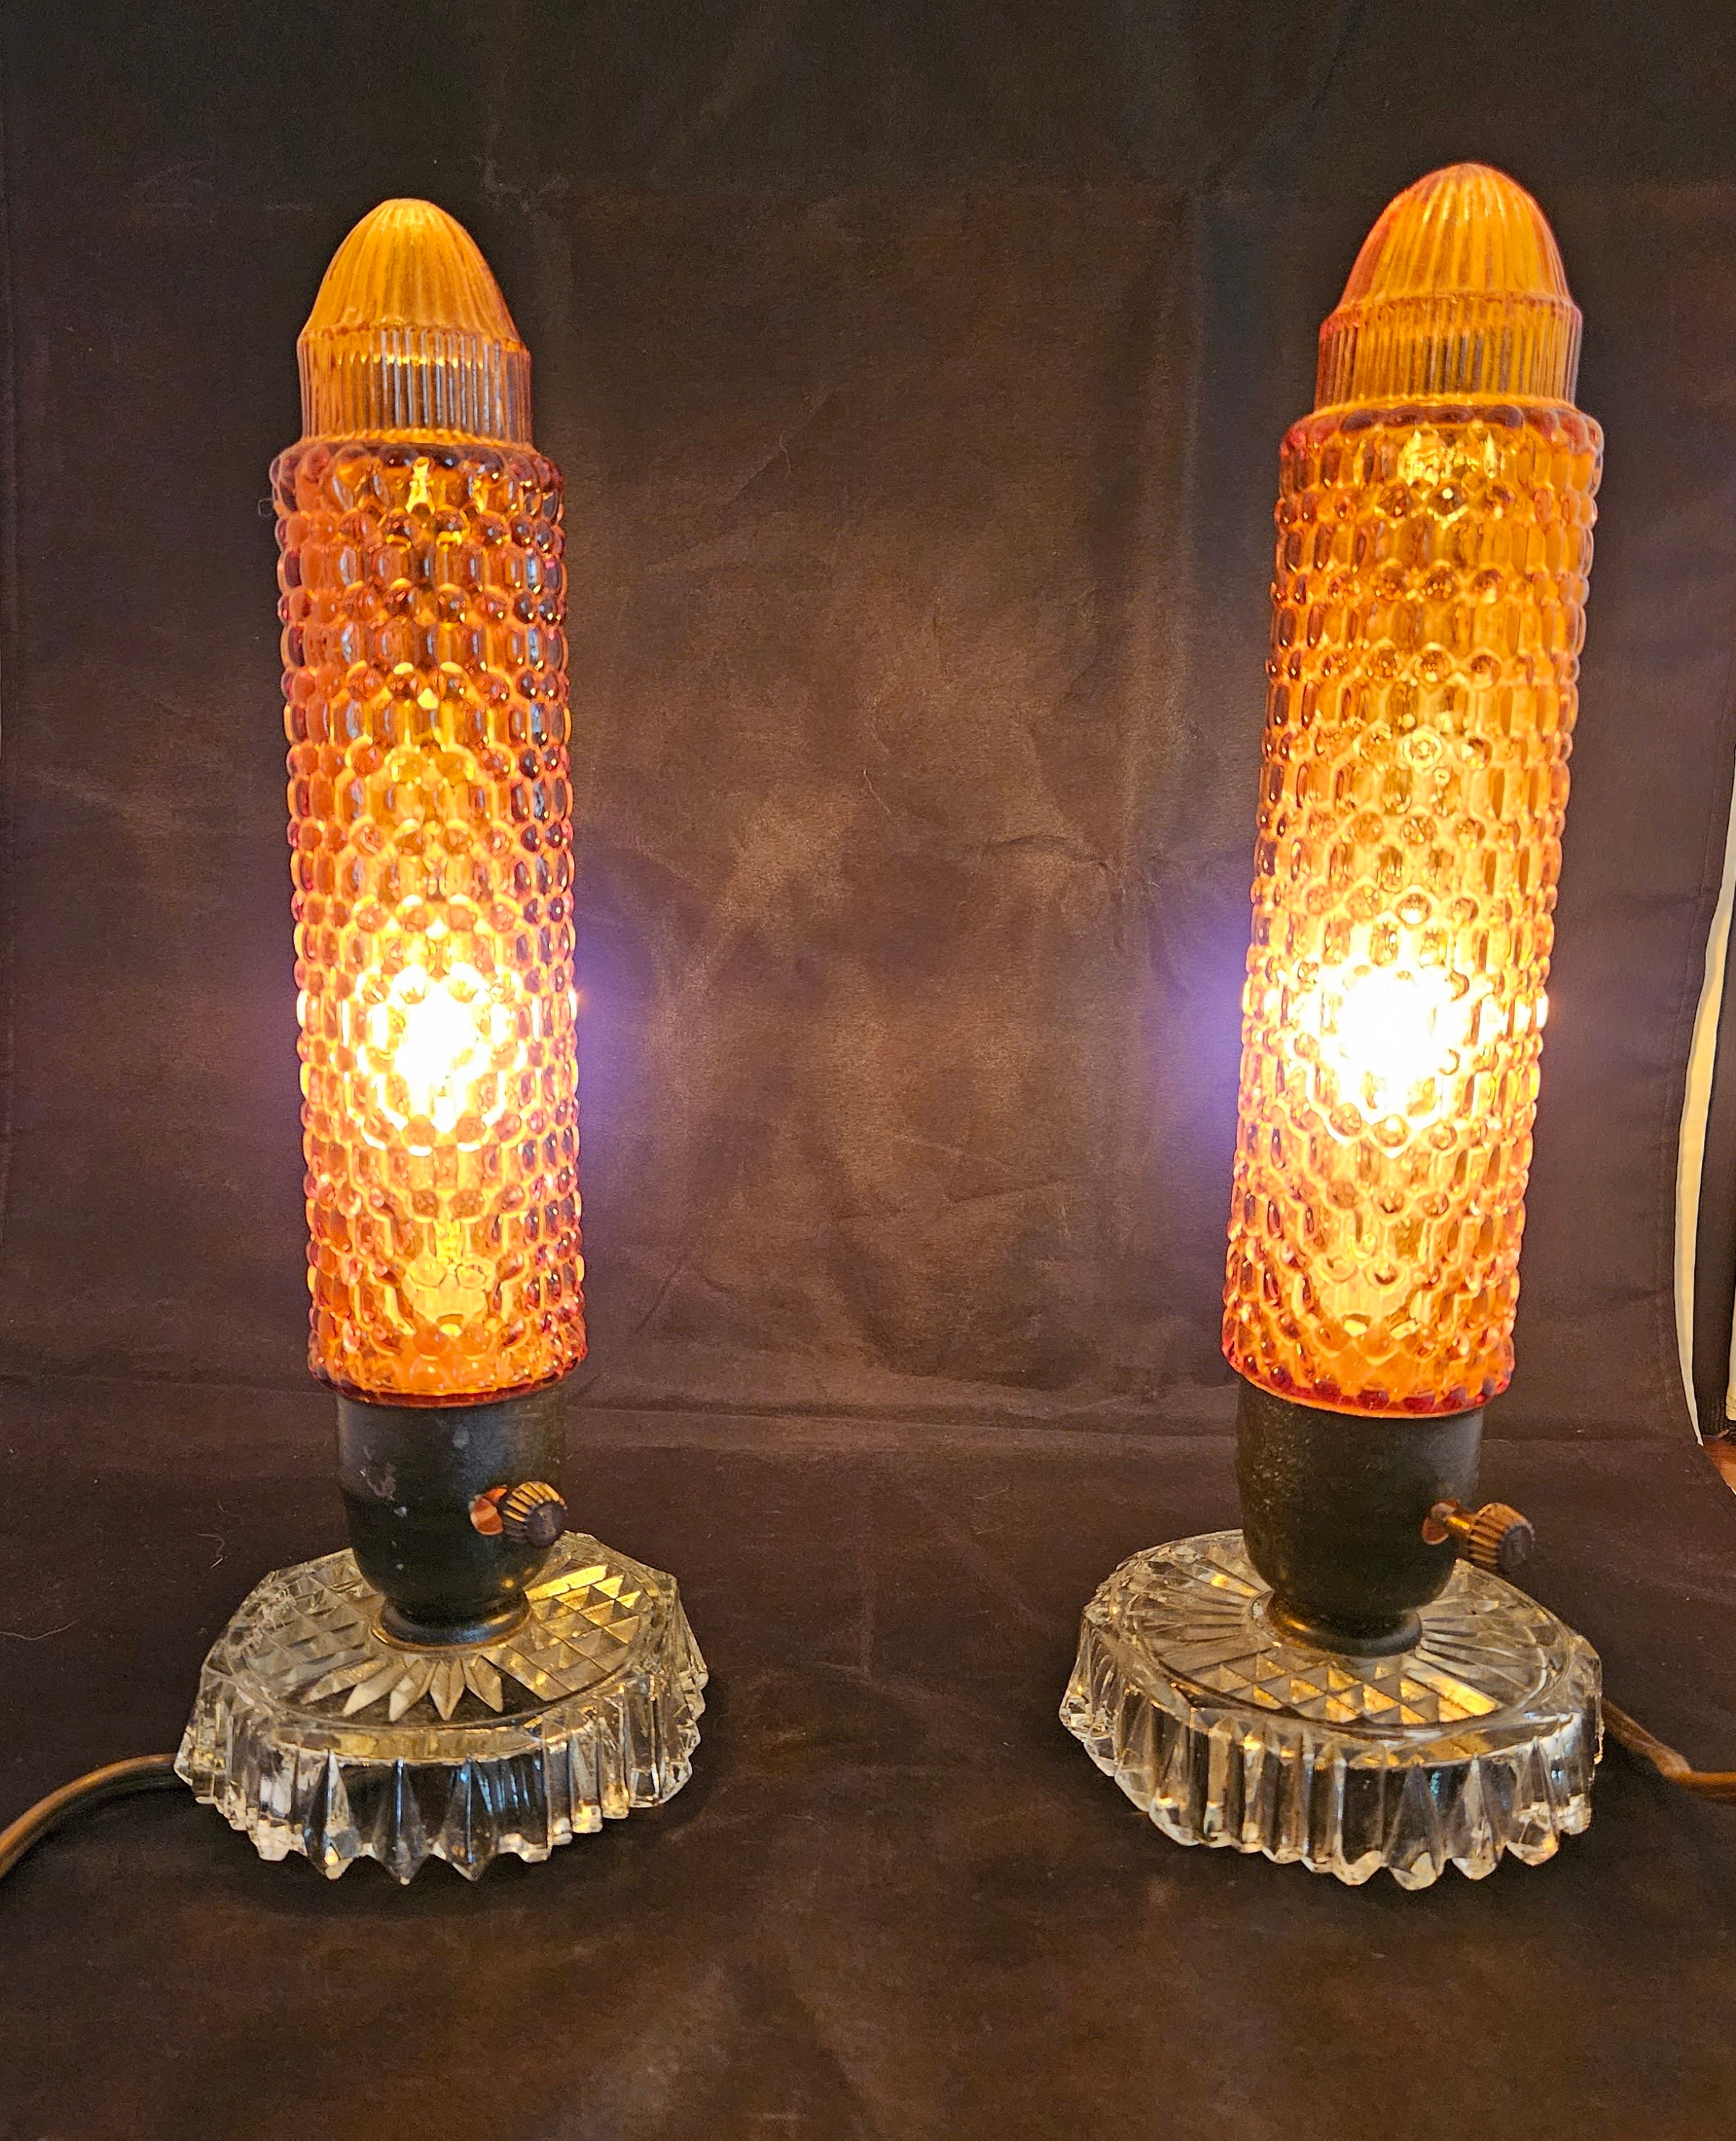 Art Deco Table Lamp Small Accent Lamp Elegant Lighting Unique Lamp Mushroom  Shade Model No. 7579 